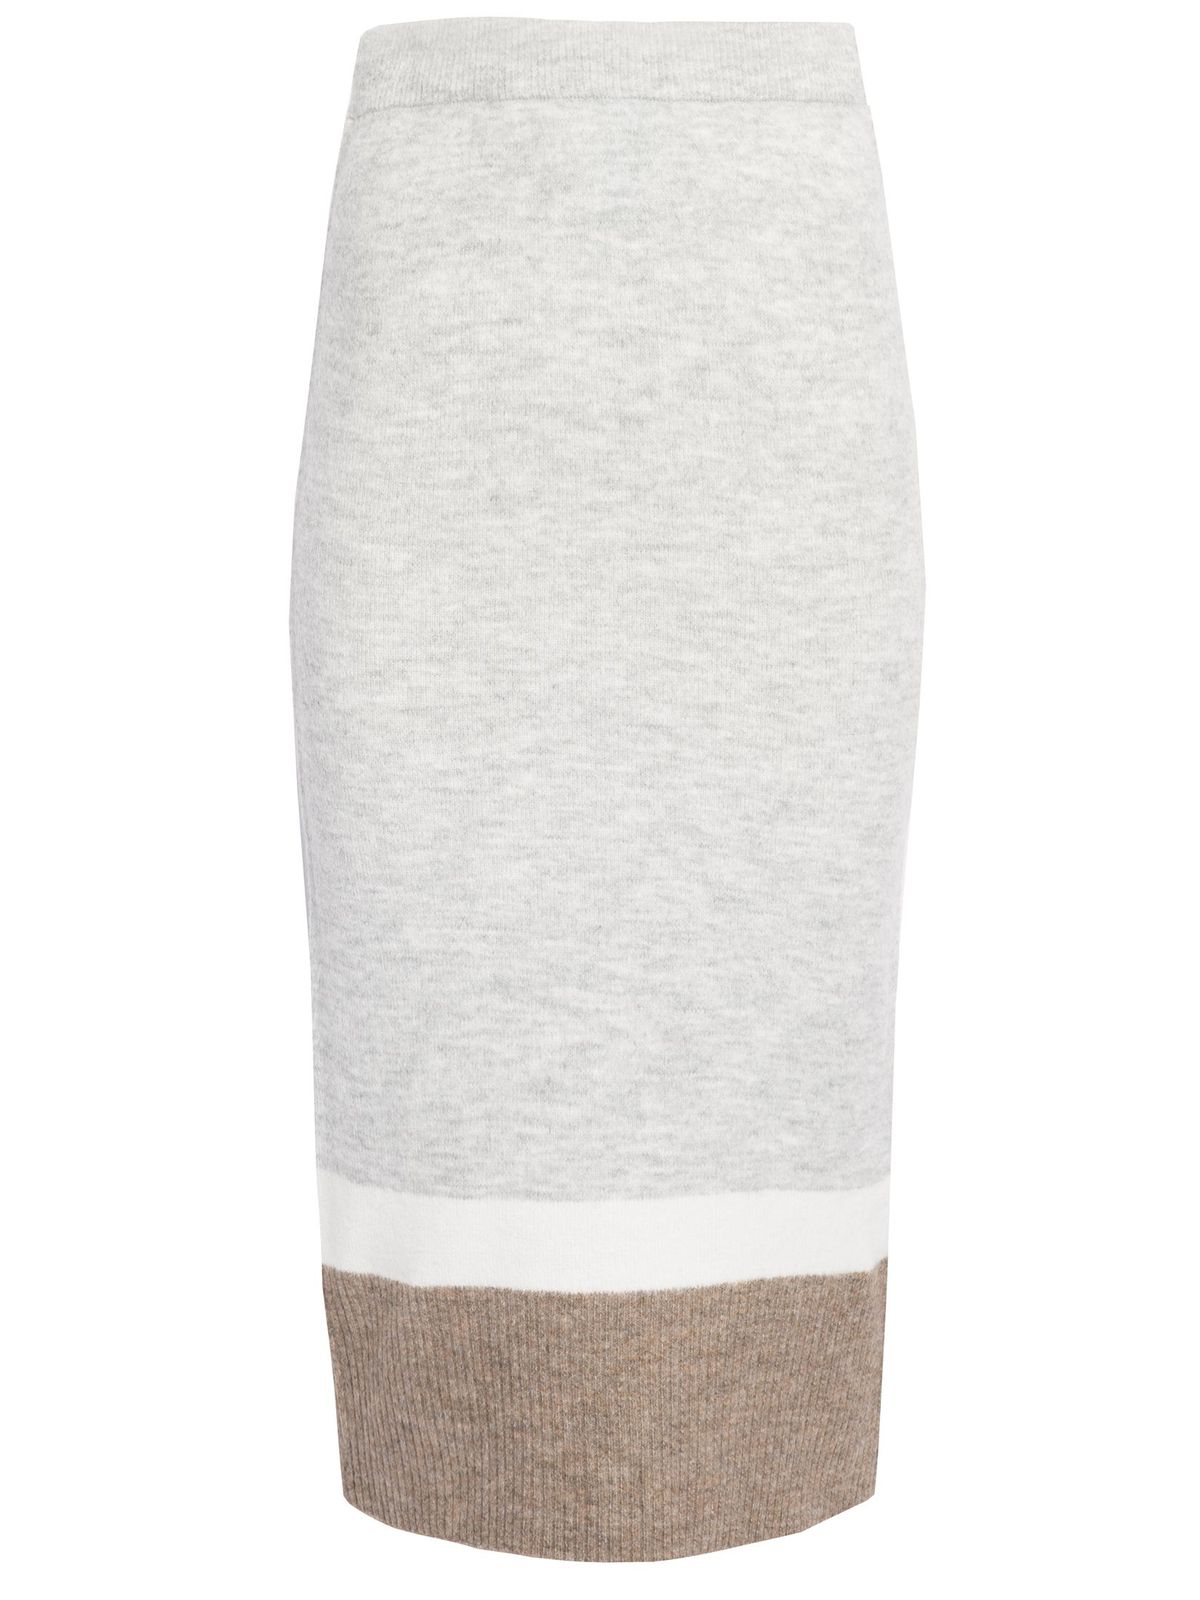 Grey skirt knitted midi pencil high waisted 4 - StarShinerS.com